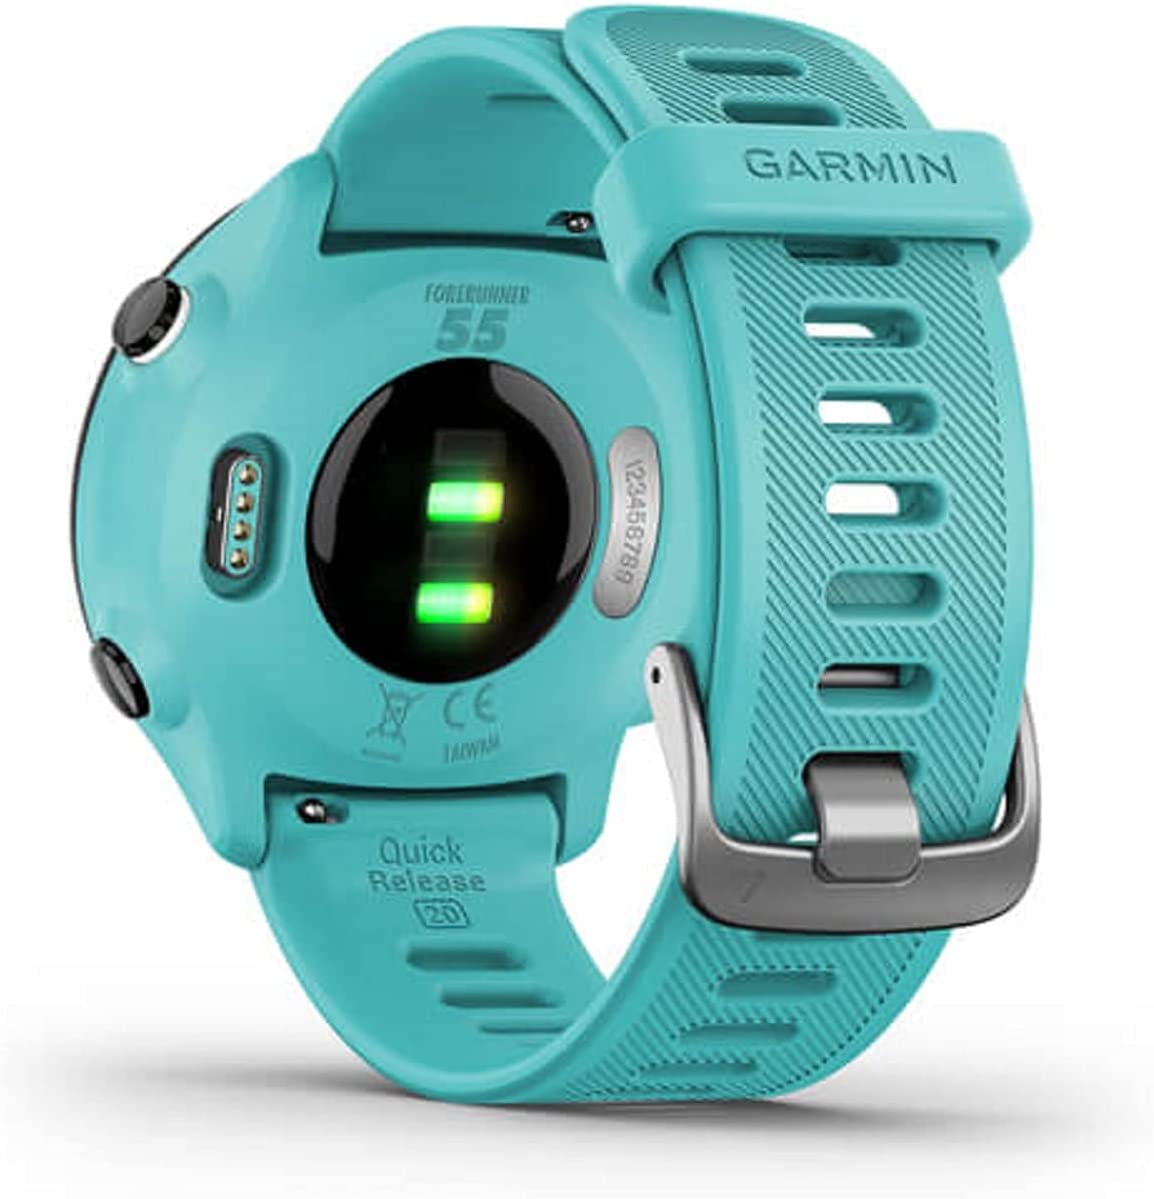 Buy GARMIN Forerunner 55 Running Watch - Aqua Blue, Universal